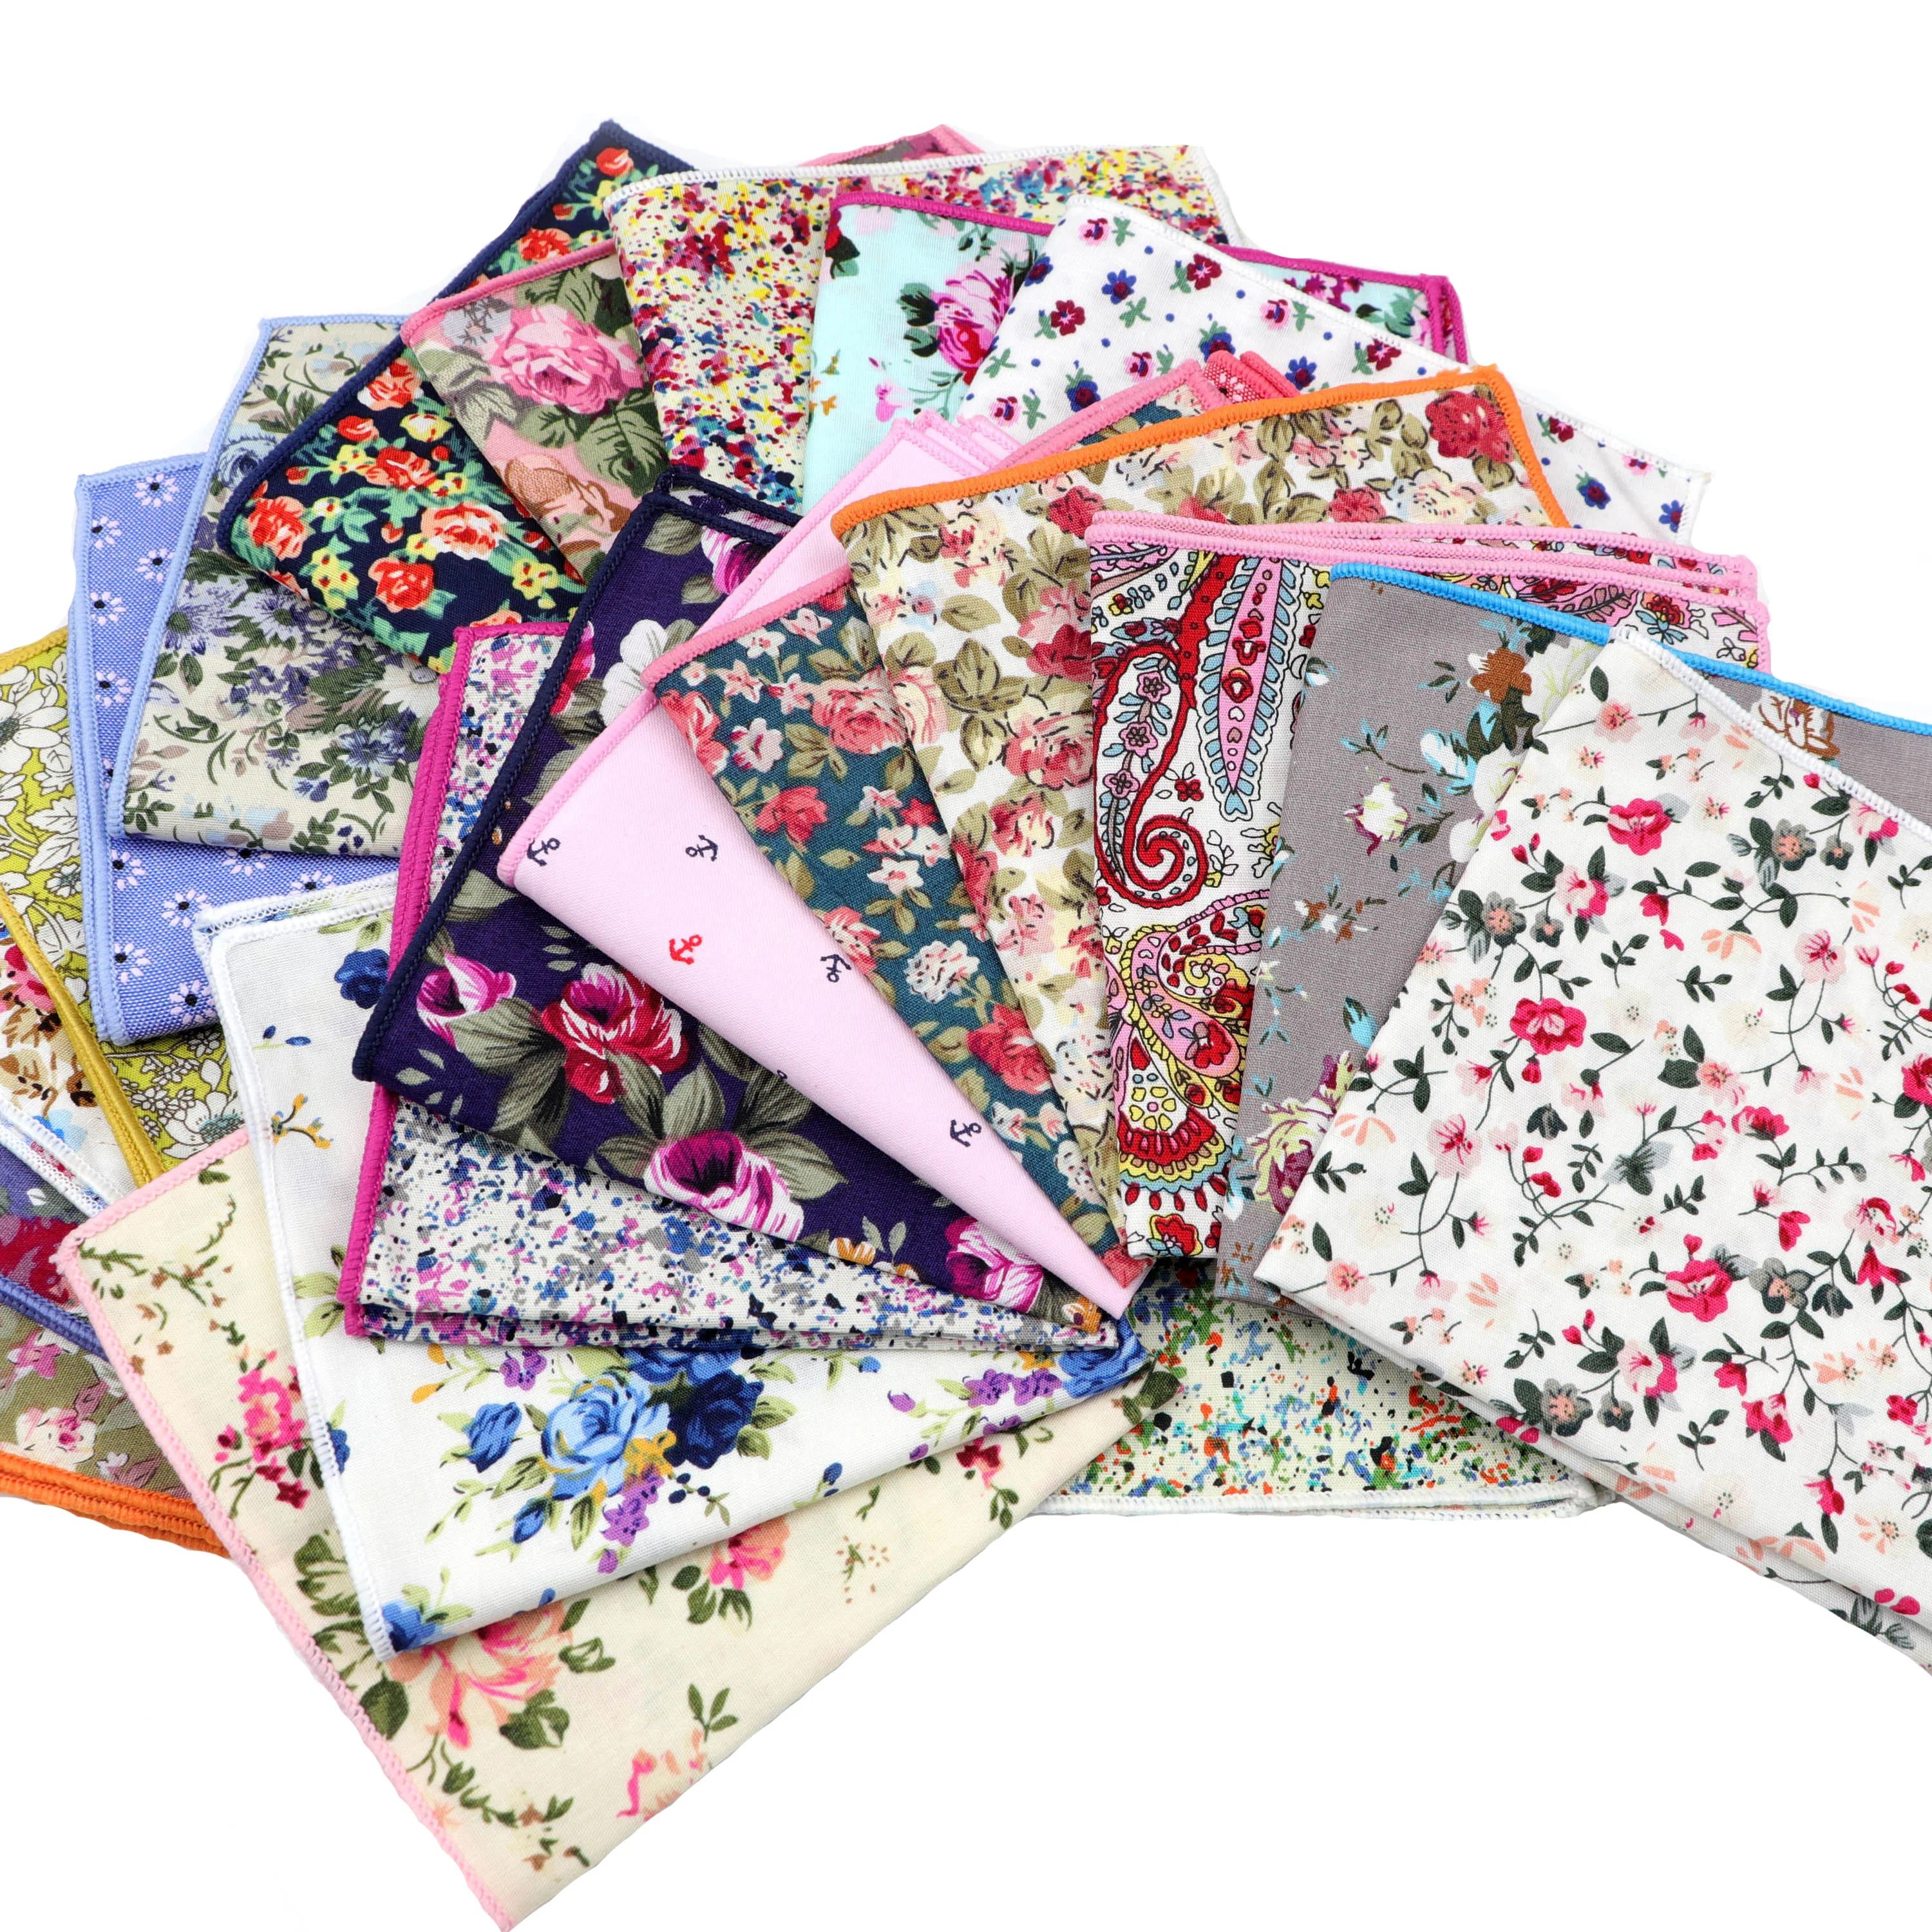 

New tyle Floral Cotton Handkerchief,2 Pieces, Photo shown